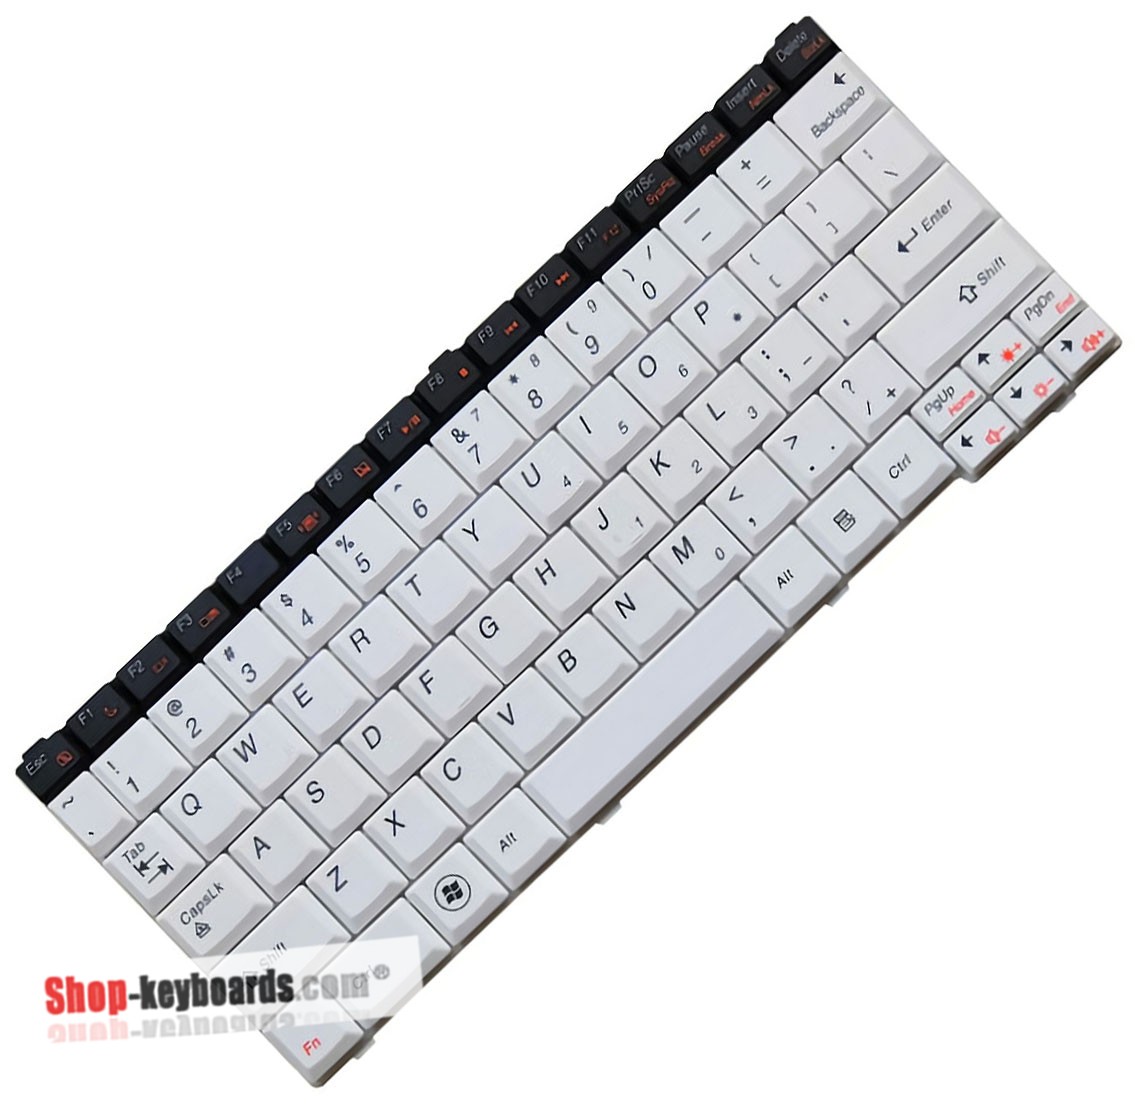 Lenovo IdeaPad U150 Keyboard replacement